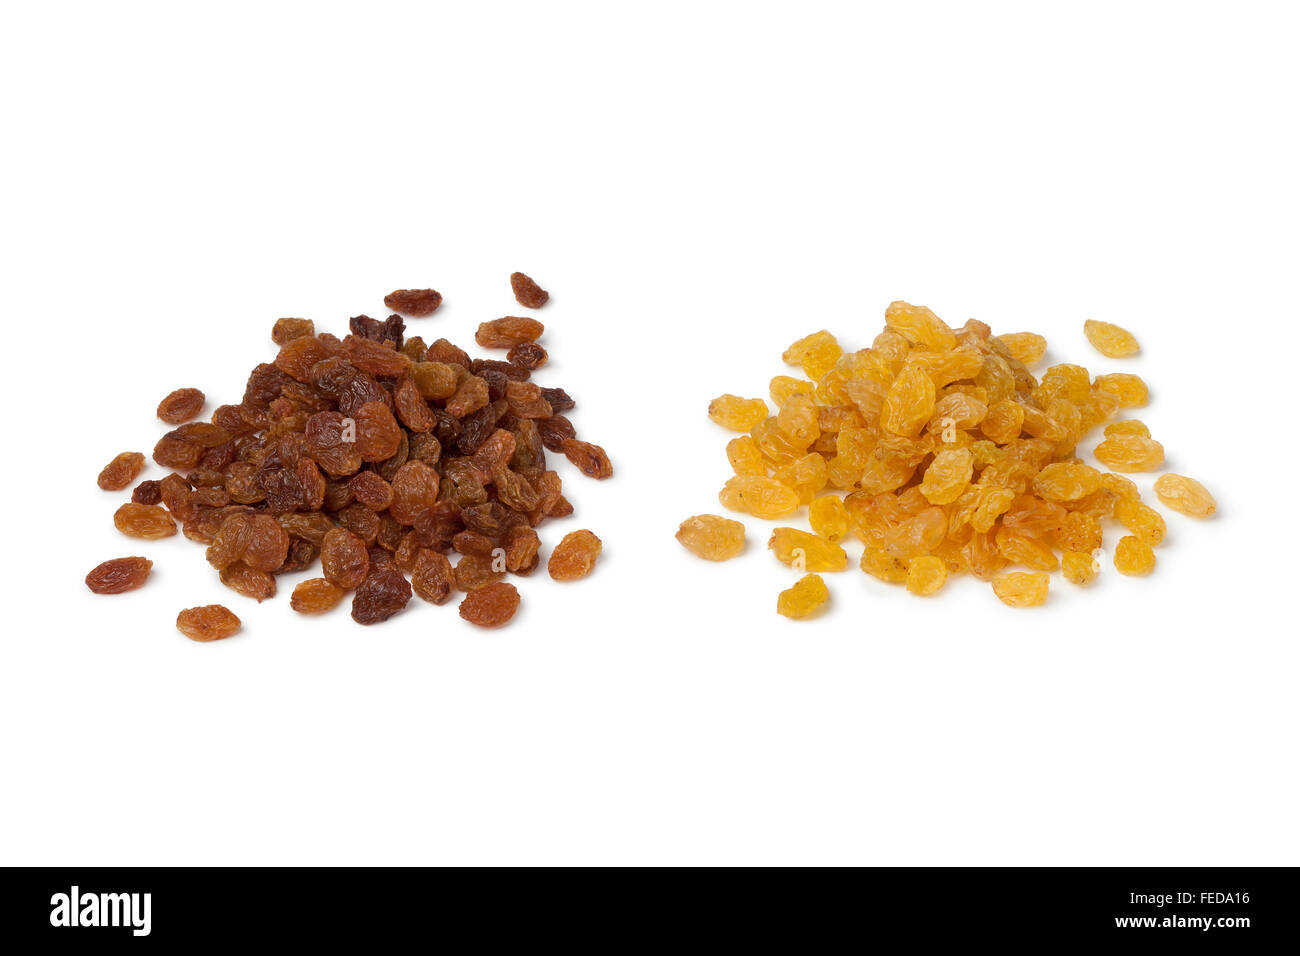 Heap of yellow and brown raisins Stock Photo